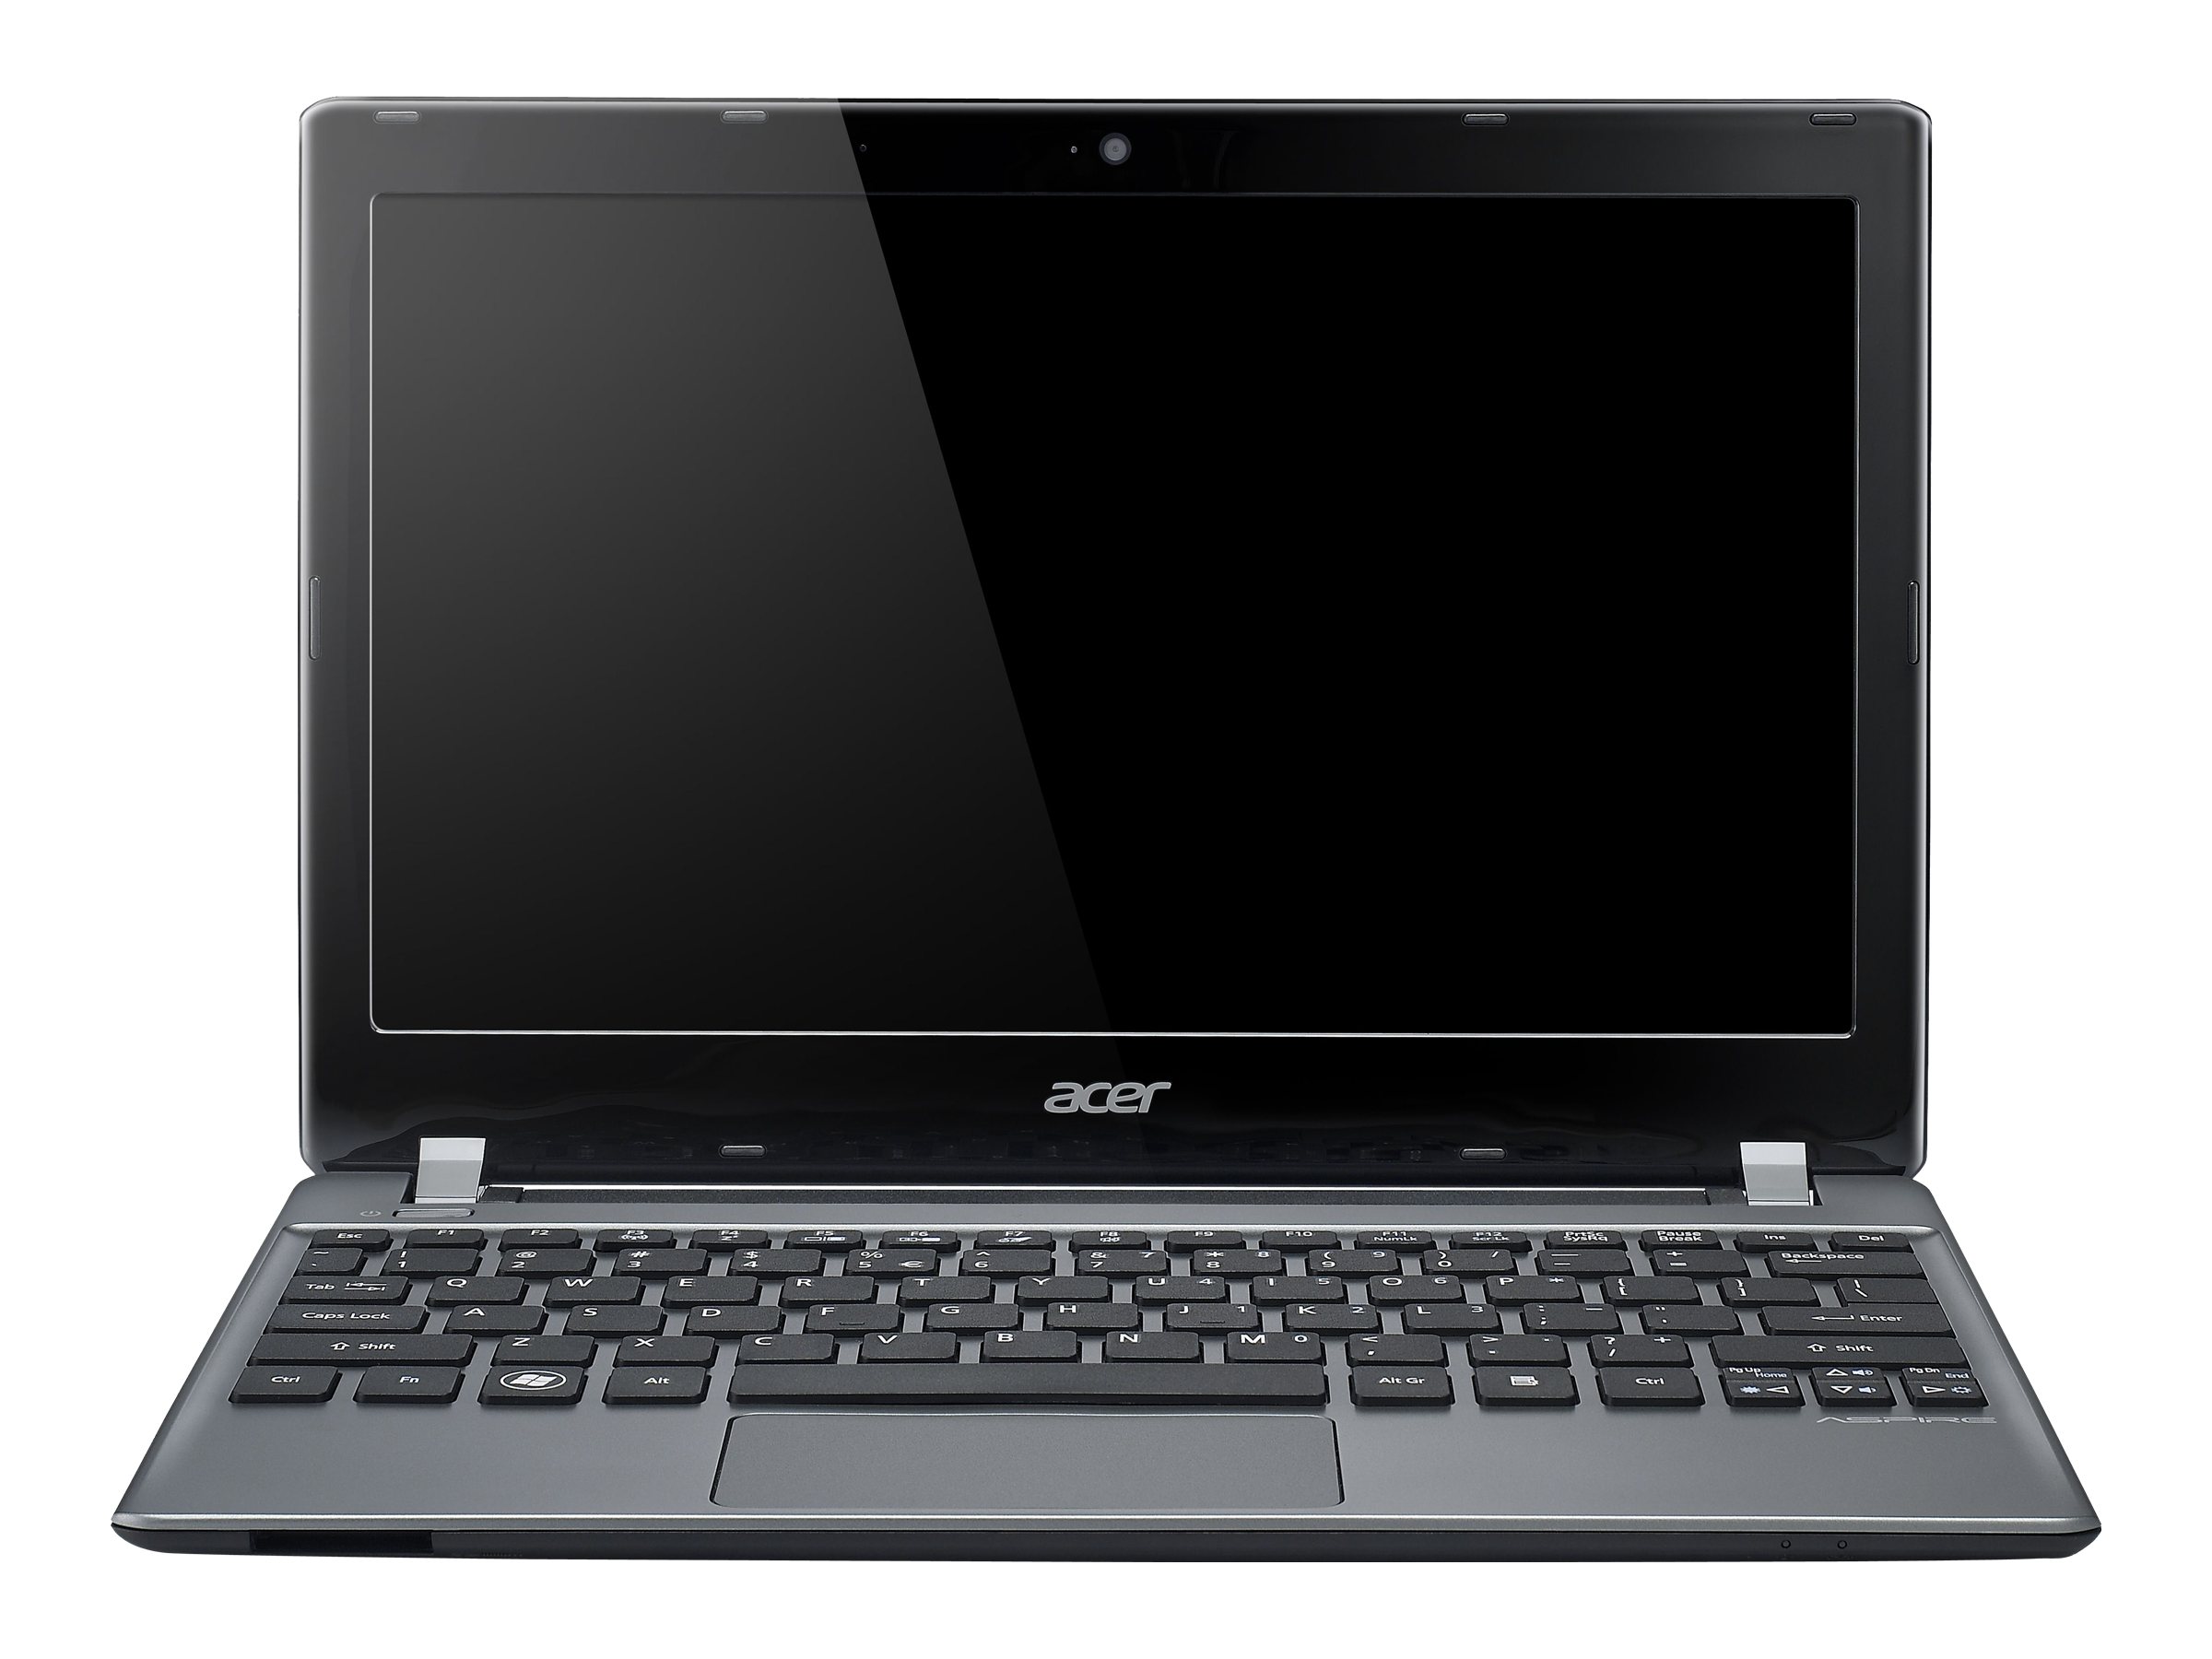 Acer Aspire V5 (171)